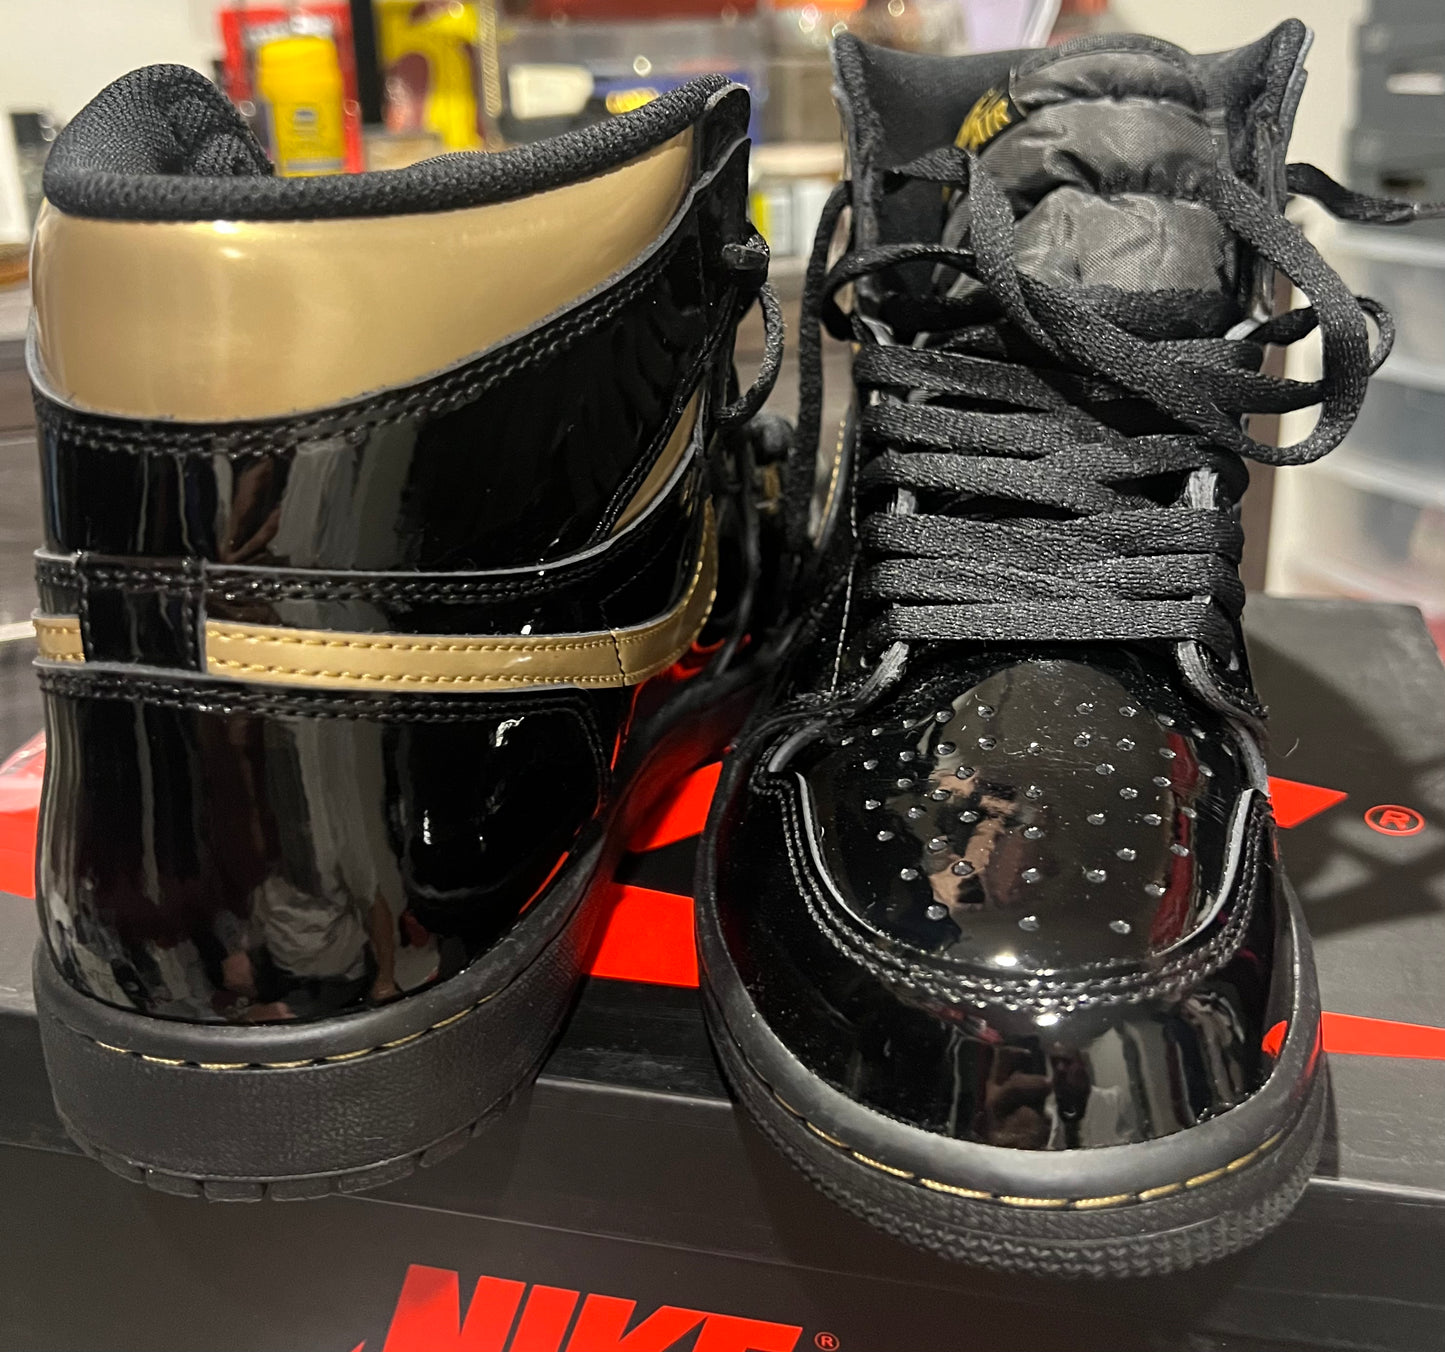 Jordan 1 Retro High Black Metallic Gold Sneaker Size 9.5 (2020, 555088-032) (Used, Pre-Worn)